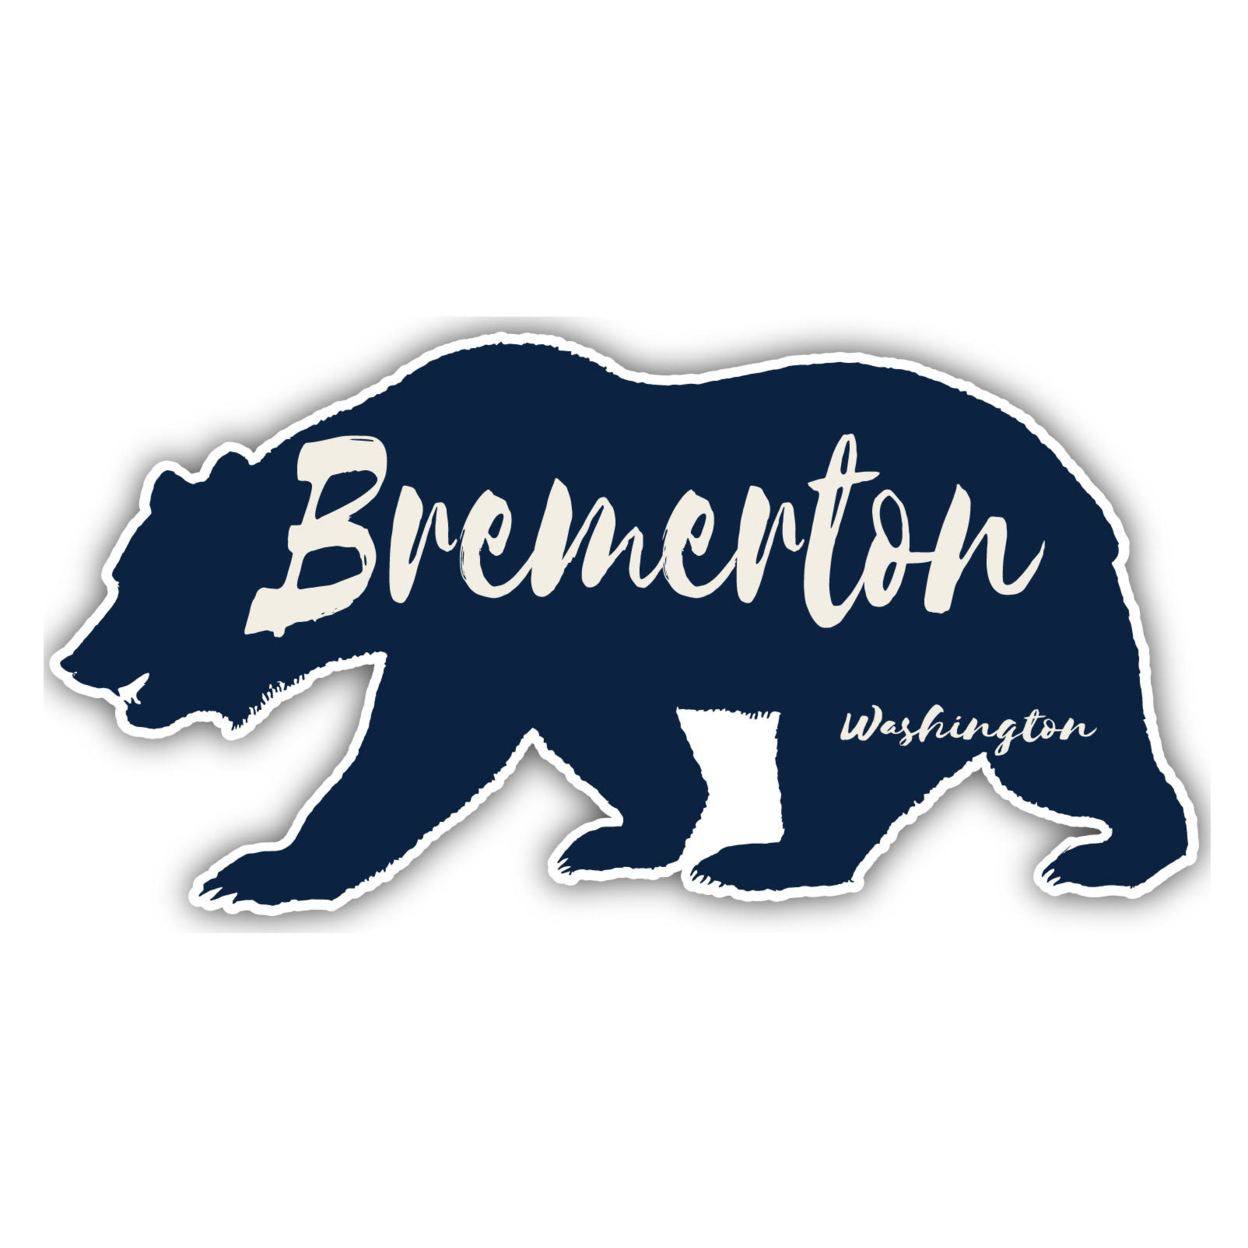 Bremerton Washington Souvenir Decorative Stickers (Choose Theme And Size) - 4-Pack, 10-Inch, Tent